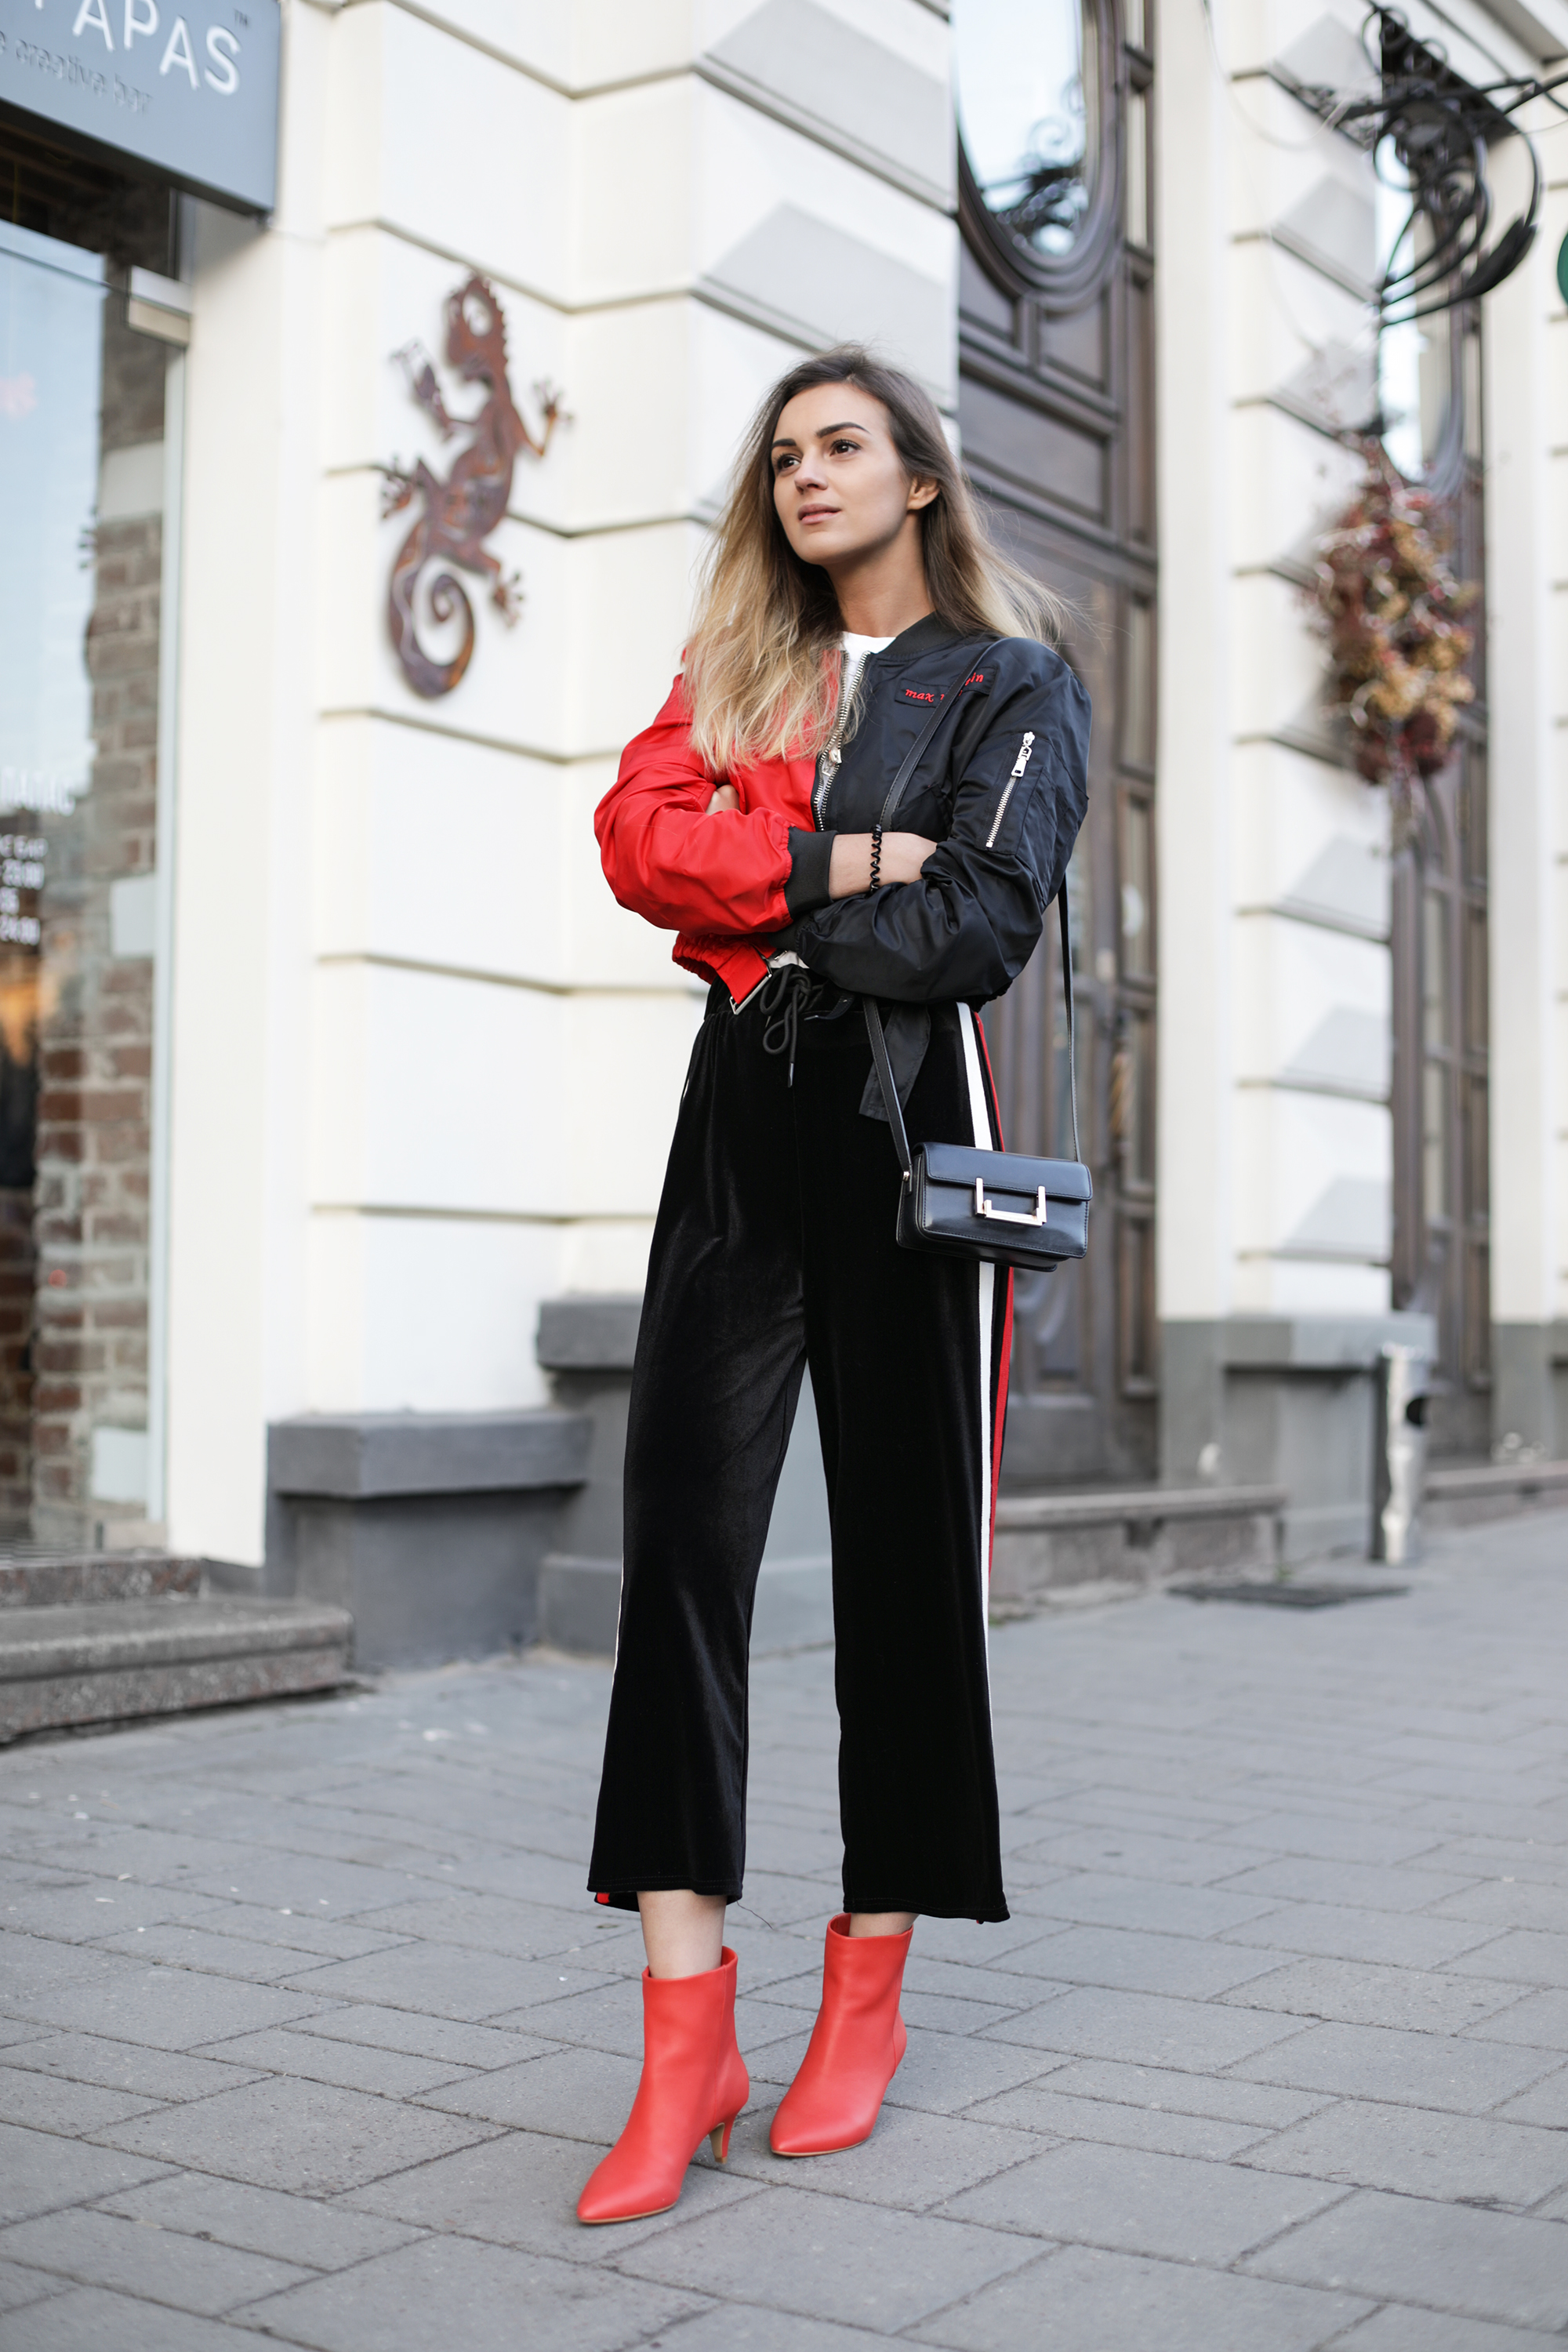 fenomeen Caroline Fabriek 3 ways to look chic in sportswear – Fashion Agony | Daily outfits, fashion  trends and inspiration | Fashion blog by Nika Huk, Ukraine